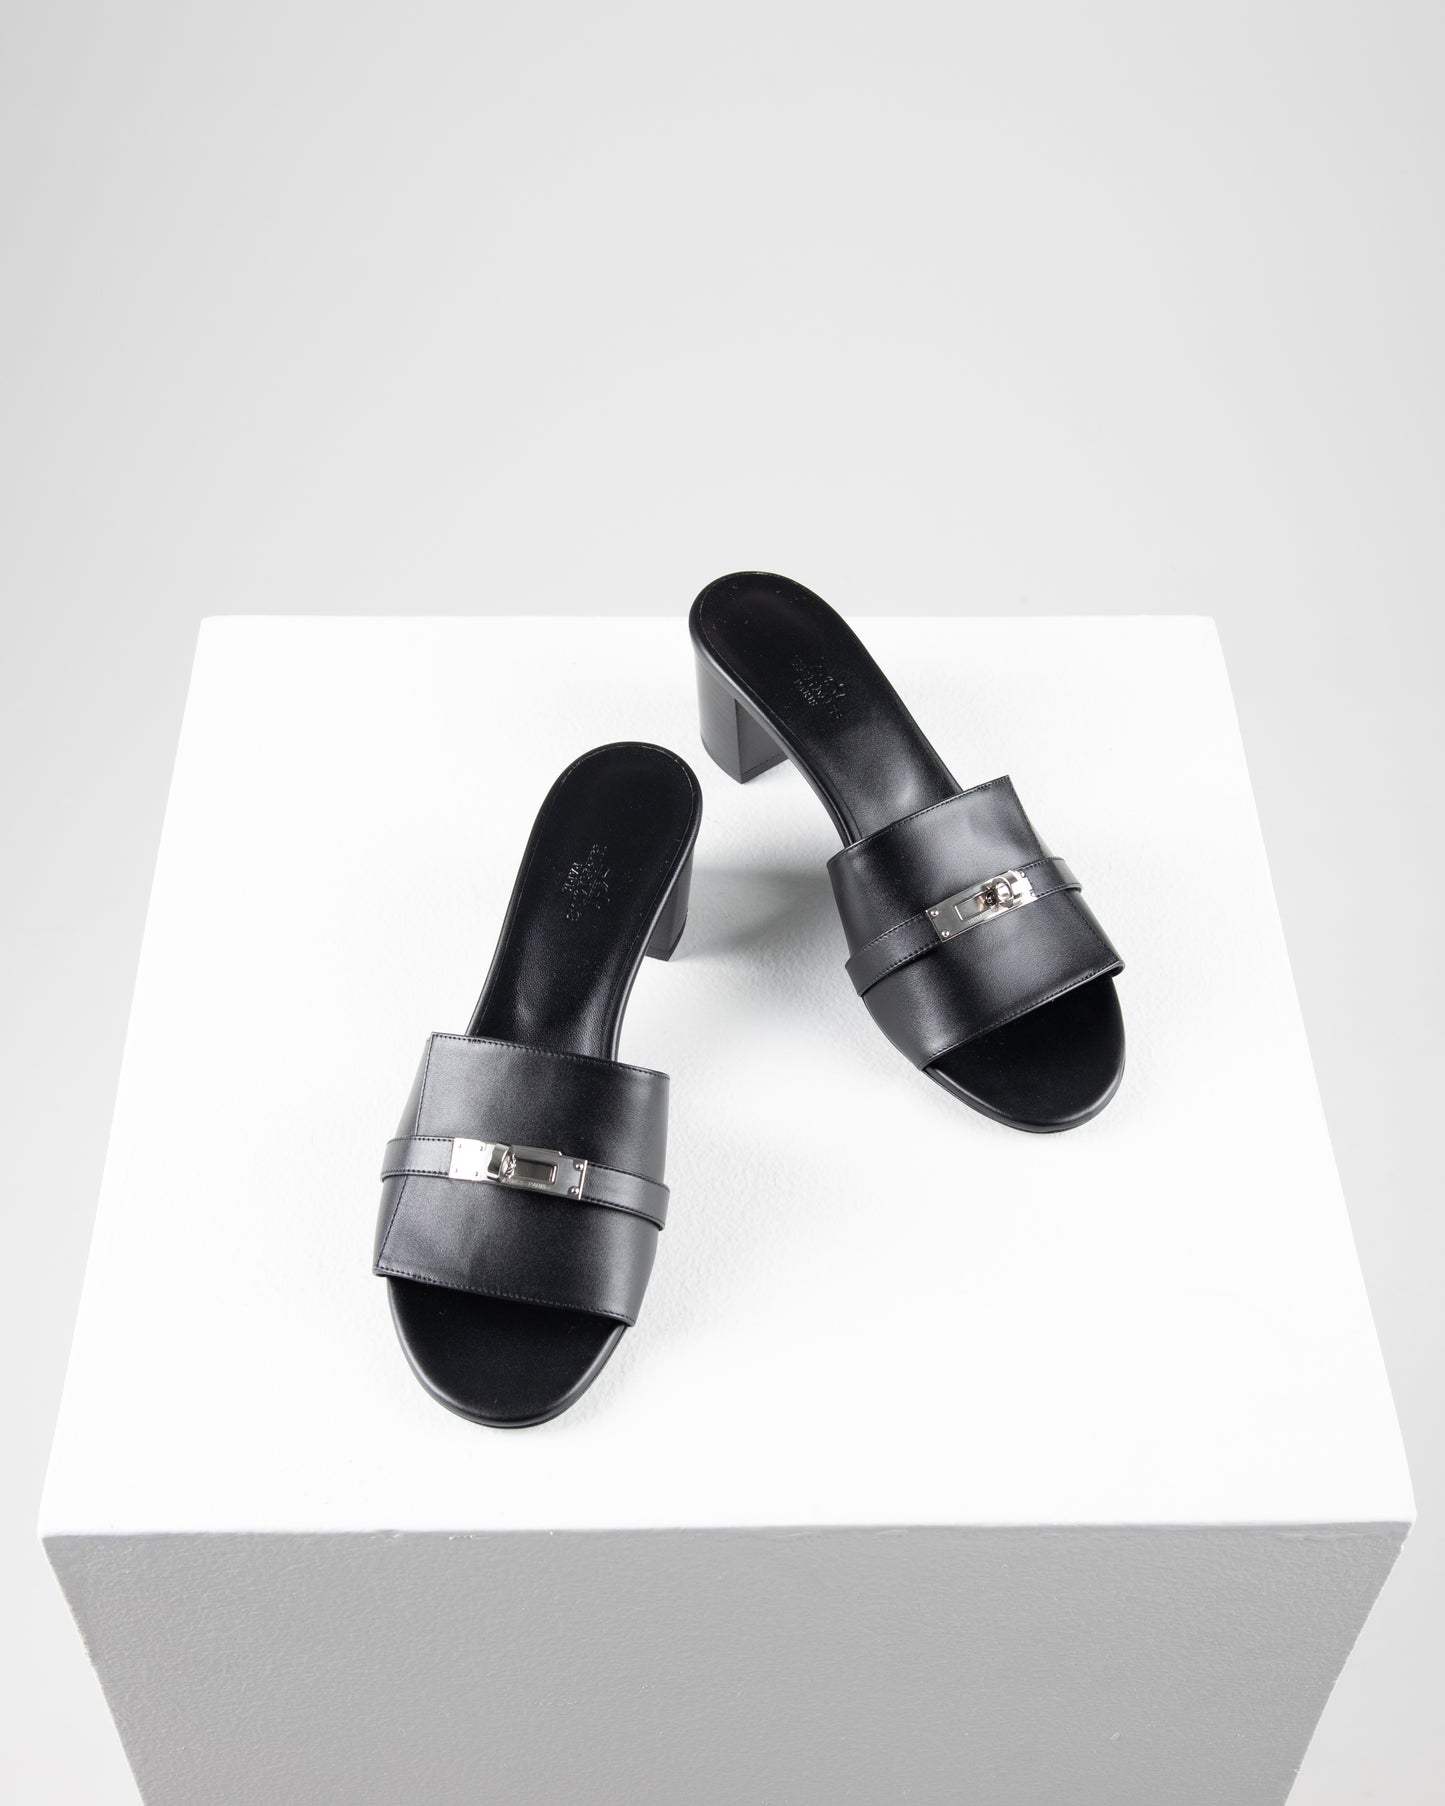 Gigi 50 Sandal in Black with Palladium Hardware